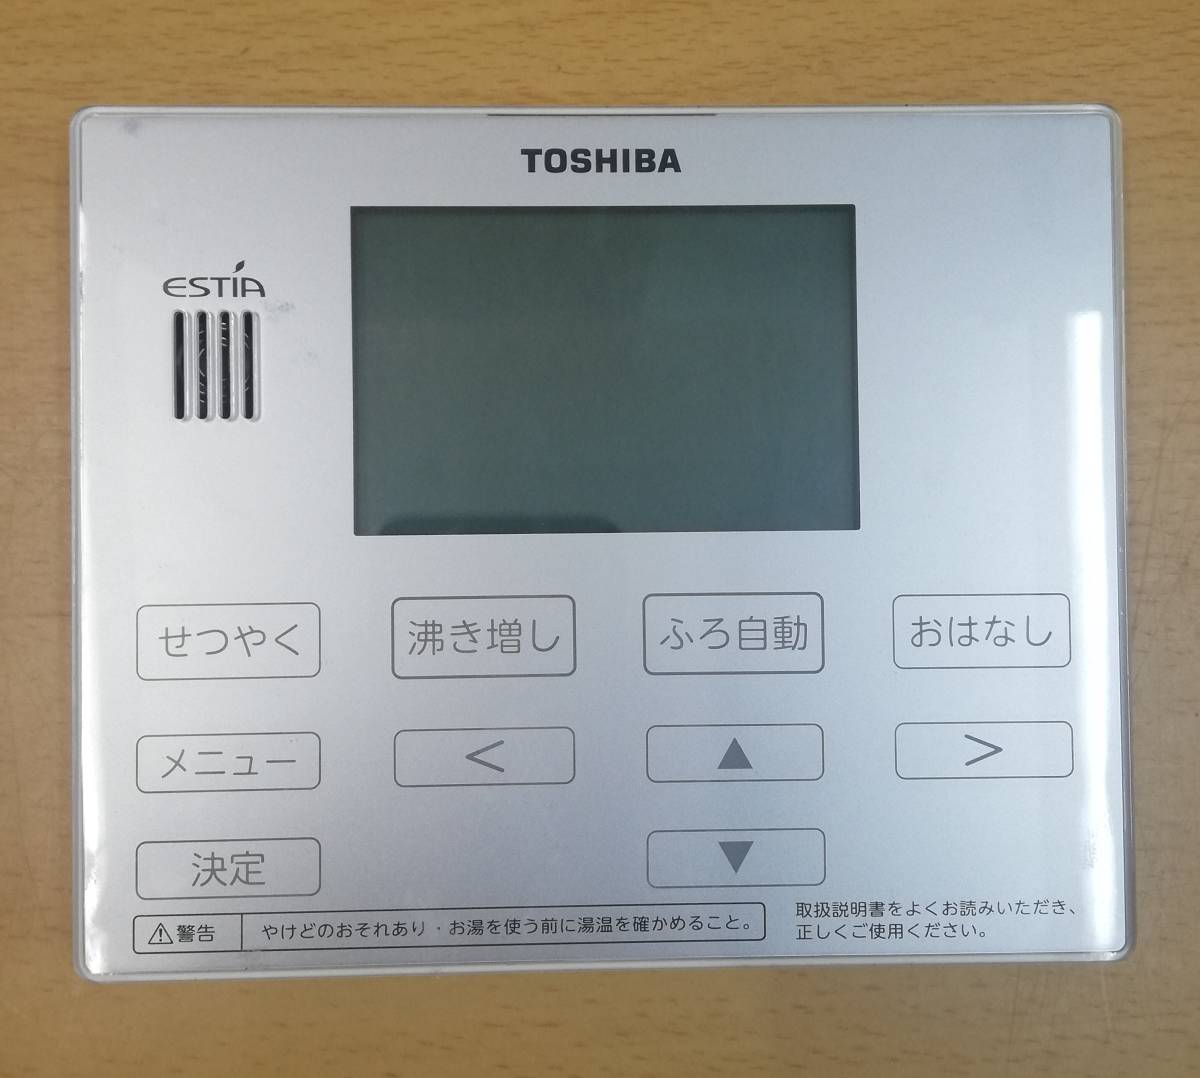  Toshiba ESTIA water heater EcoCute remote control kitchen bathroom 